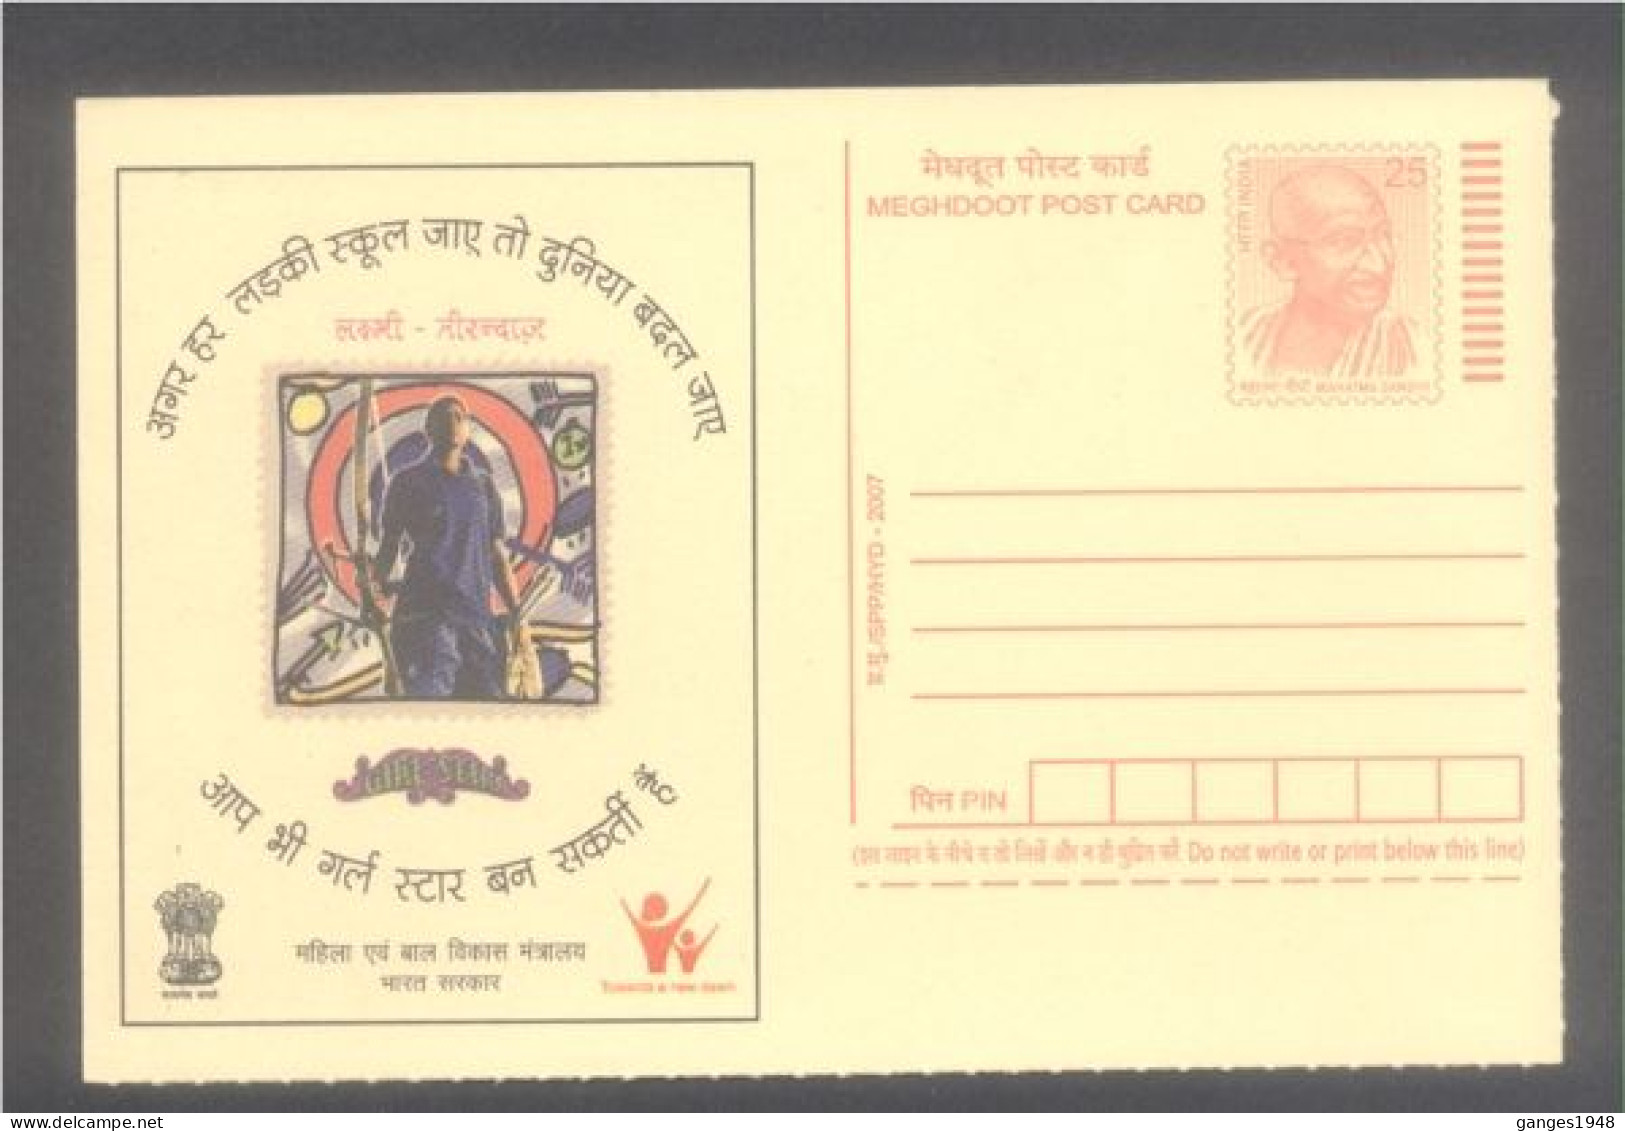 INDIA  2007  Archery  Girl Archer  Hindi Language  Mahatma Gandhi  Post Card  #  36358  D   Indien Inde - Tiro Al Arco